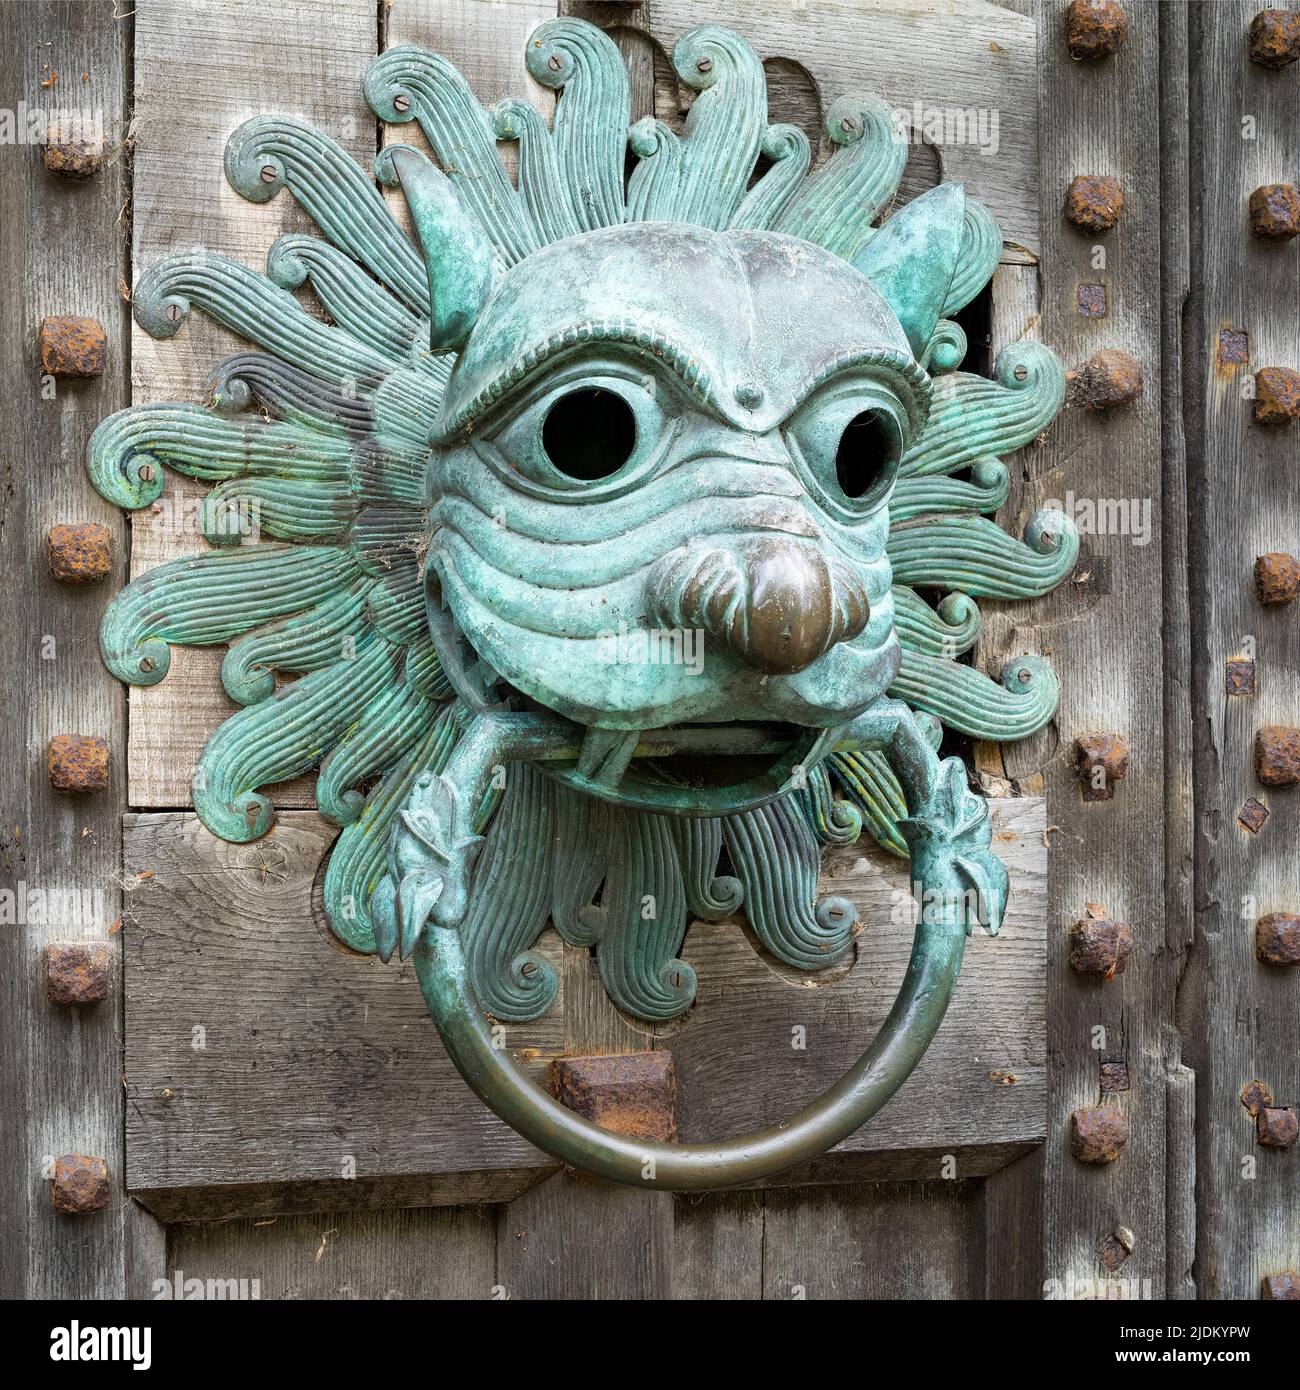 The 12th century 'monster door knocker' design at Brougham Hall, Penrith, Cumbria, UK Stock Photo